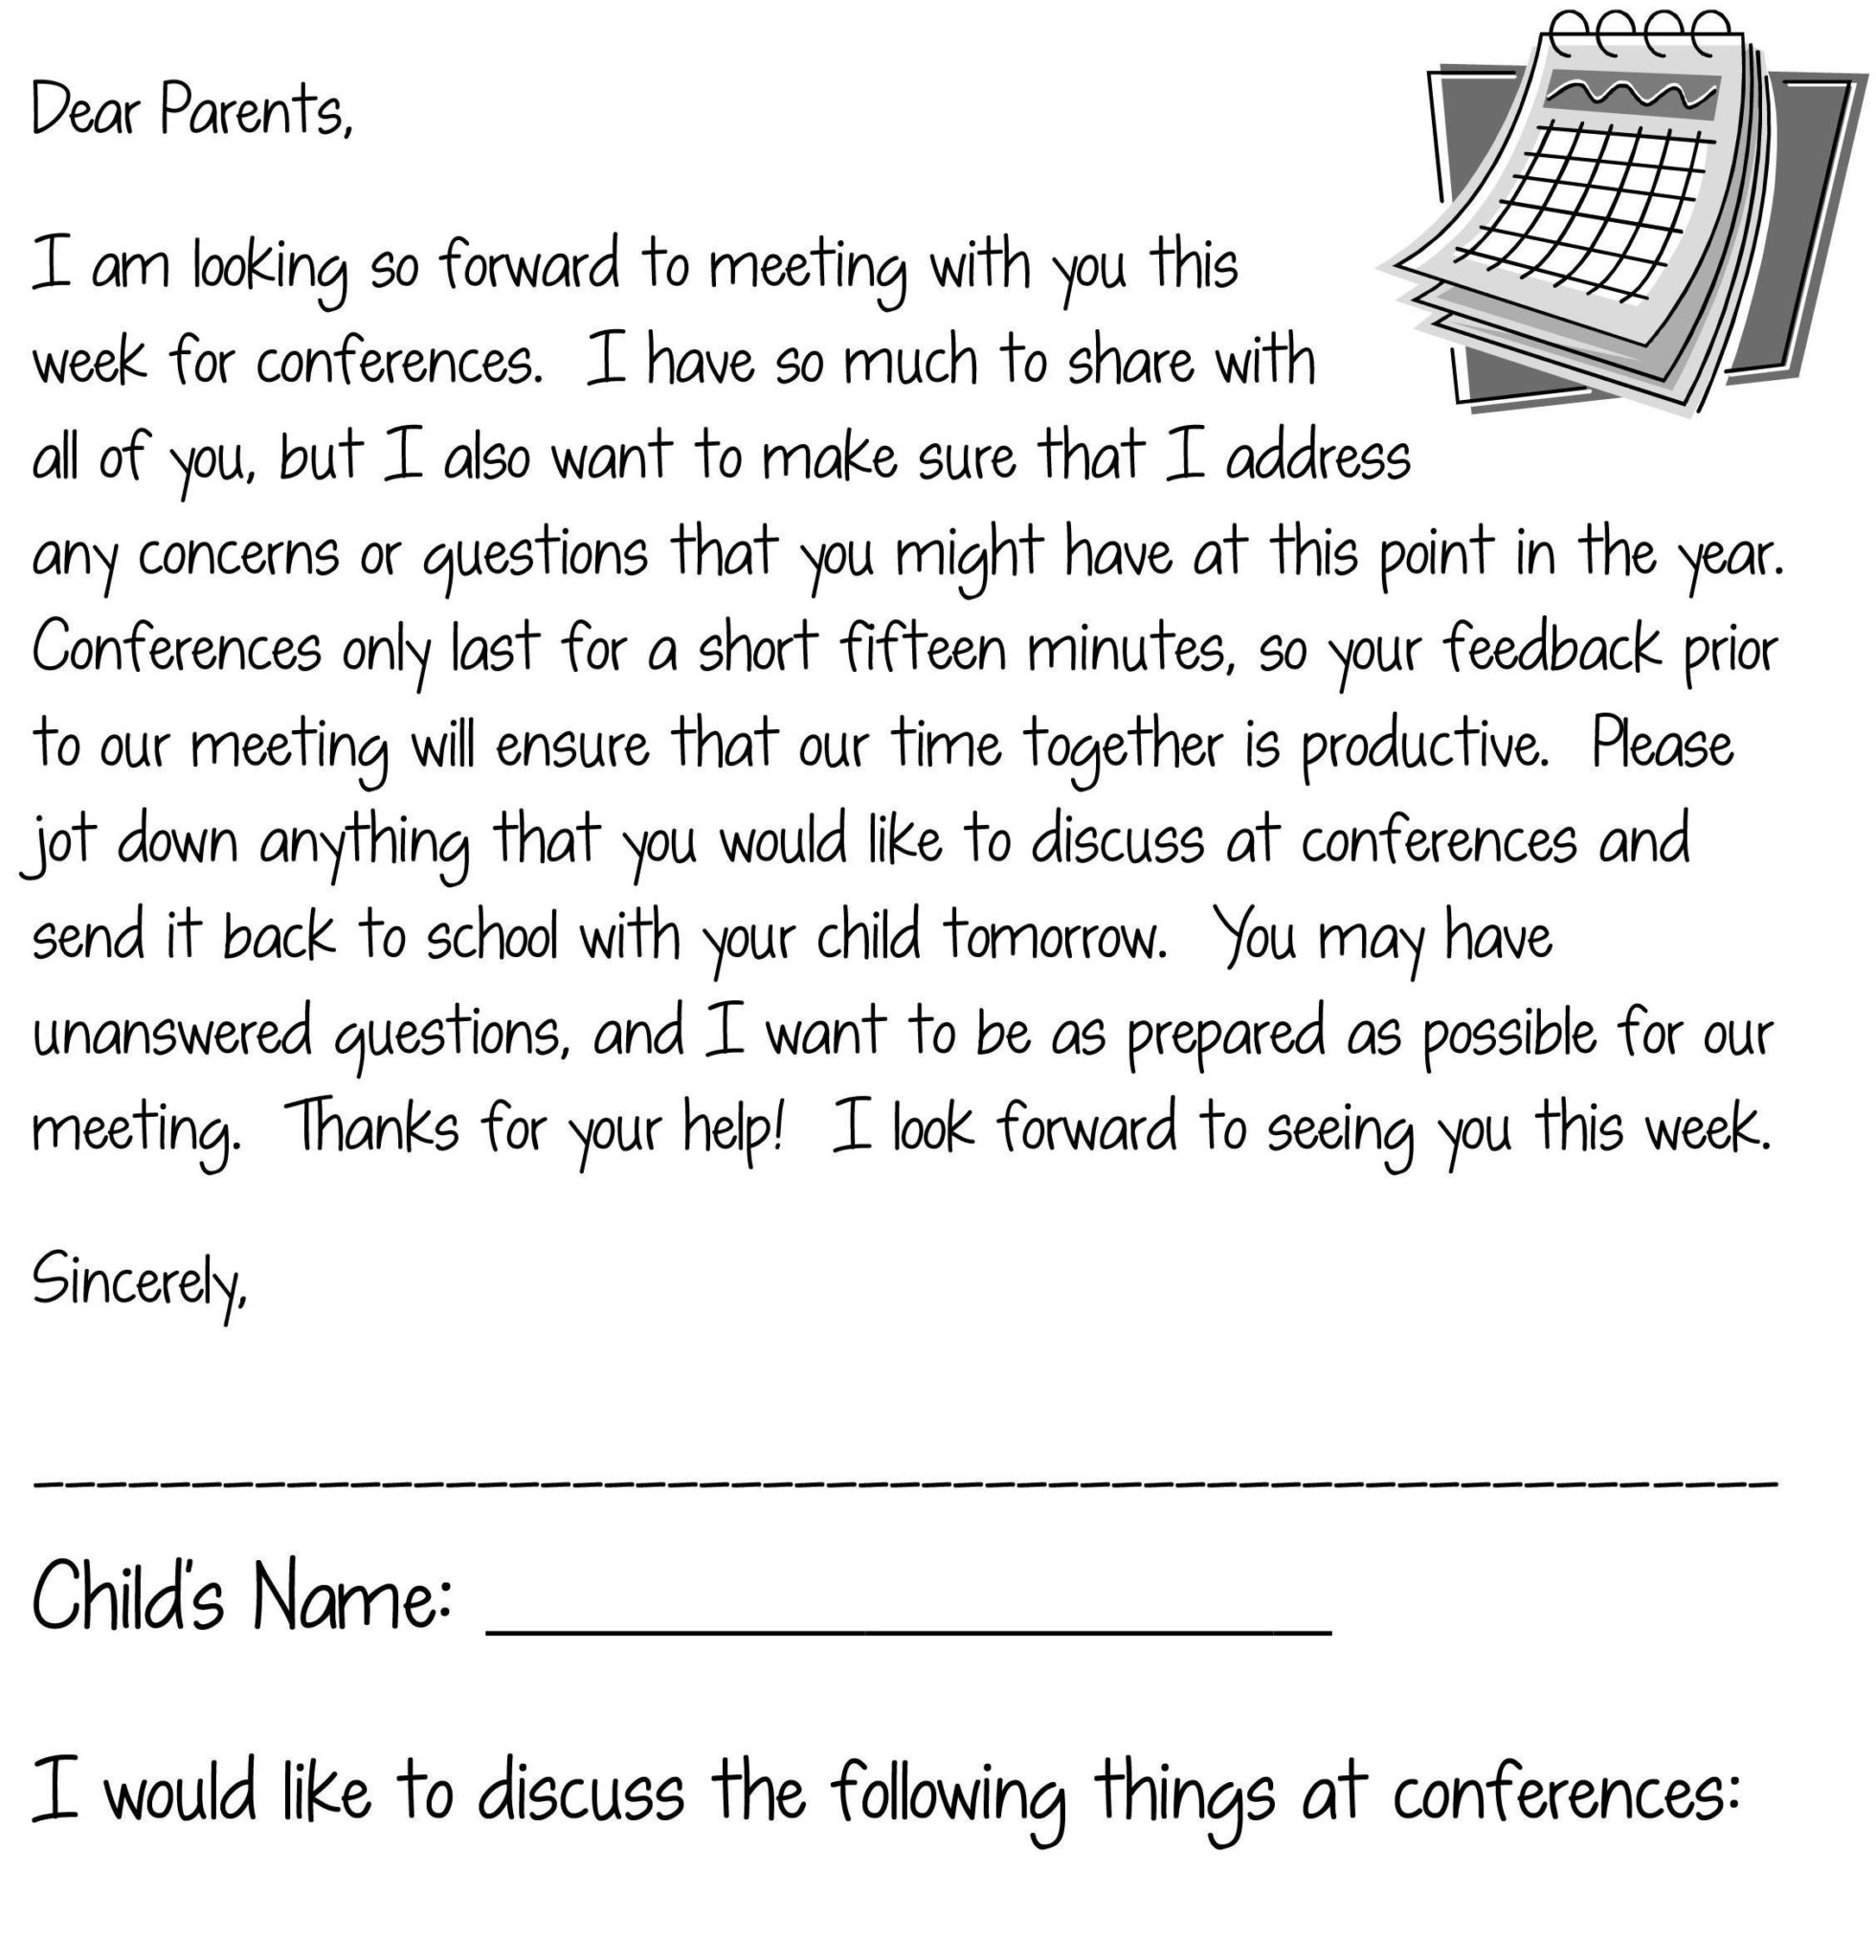 Sample-Invitation-Letter-Parent-Teacher-Conference intended for Letter